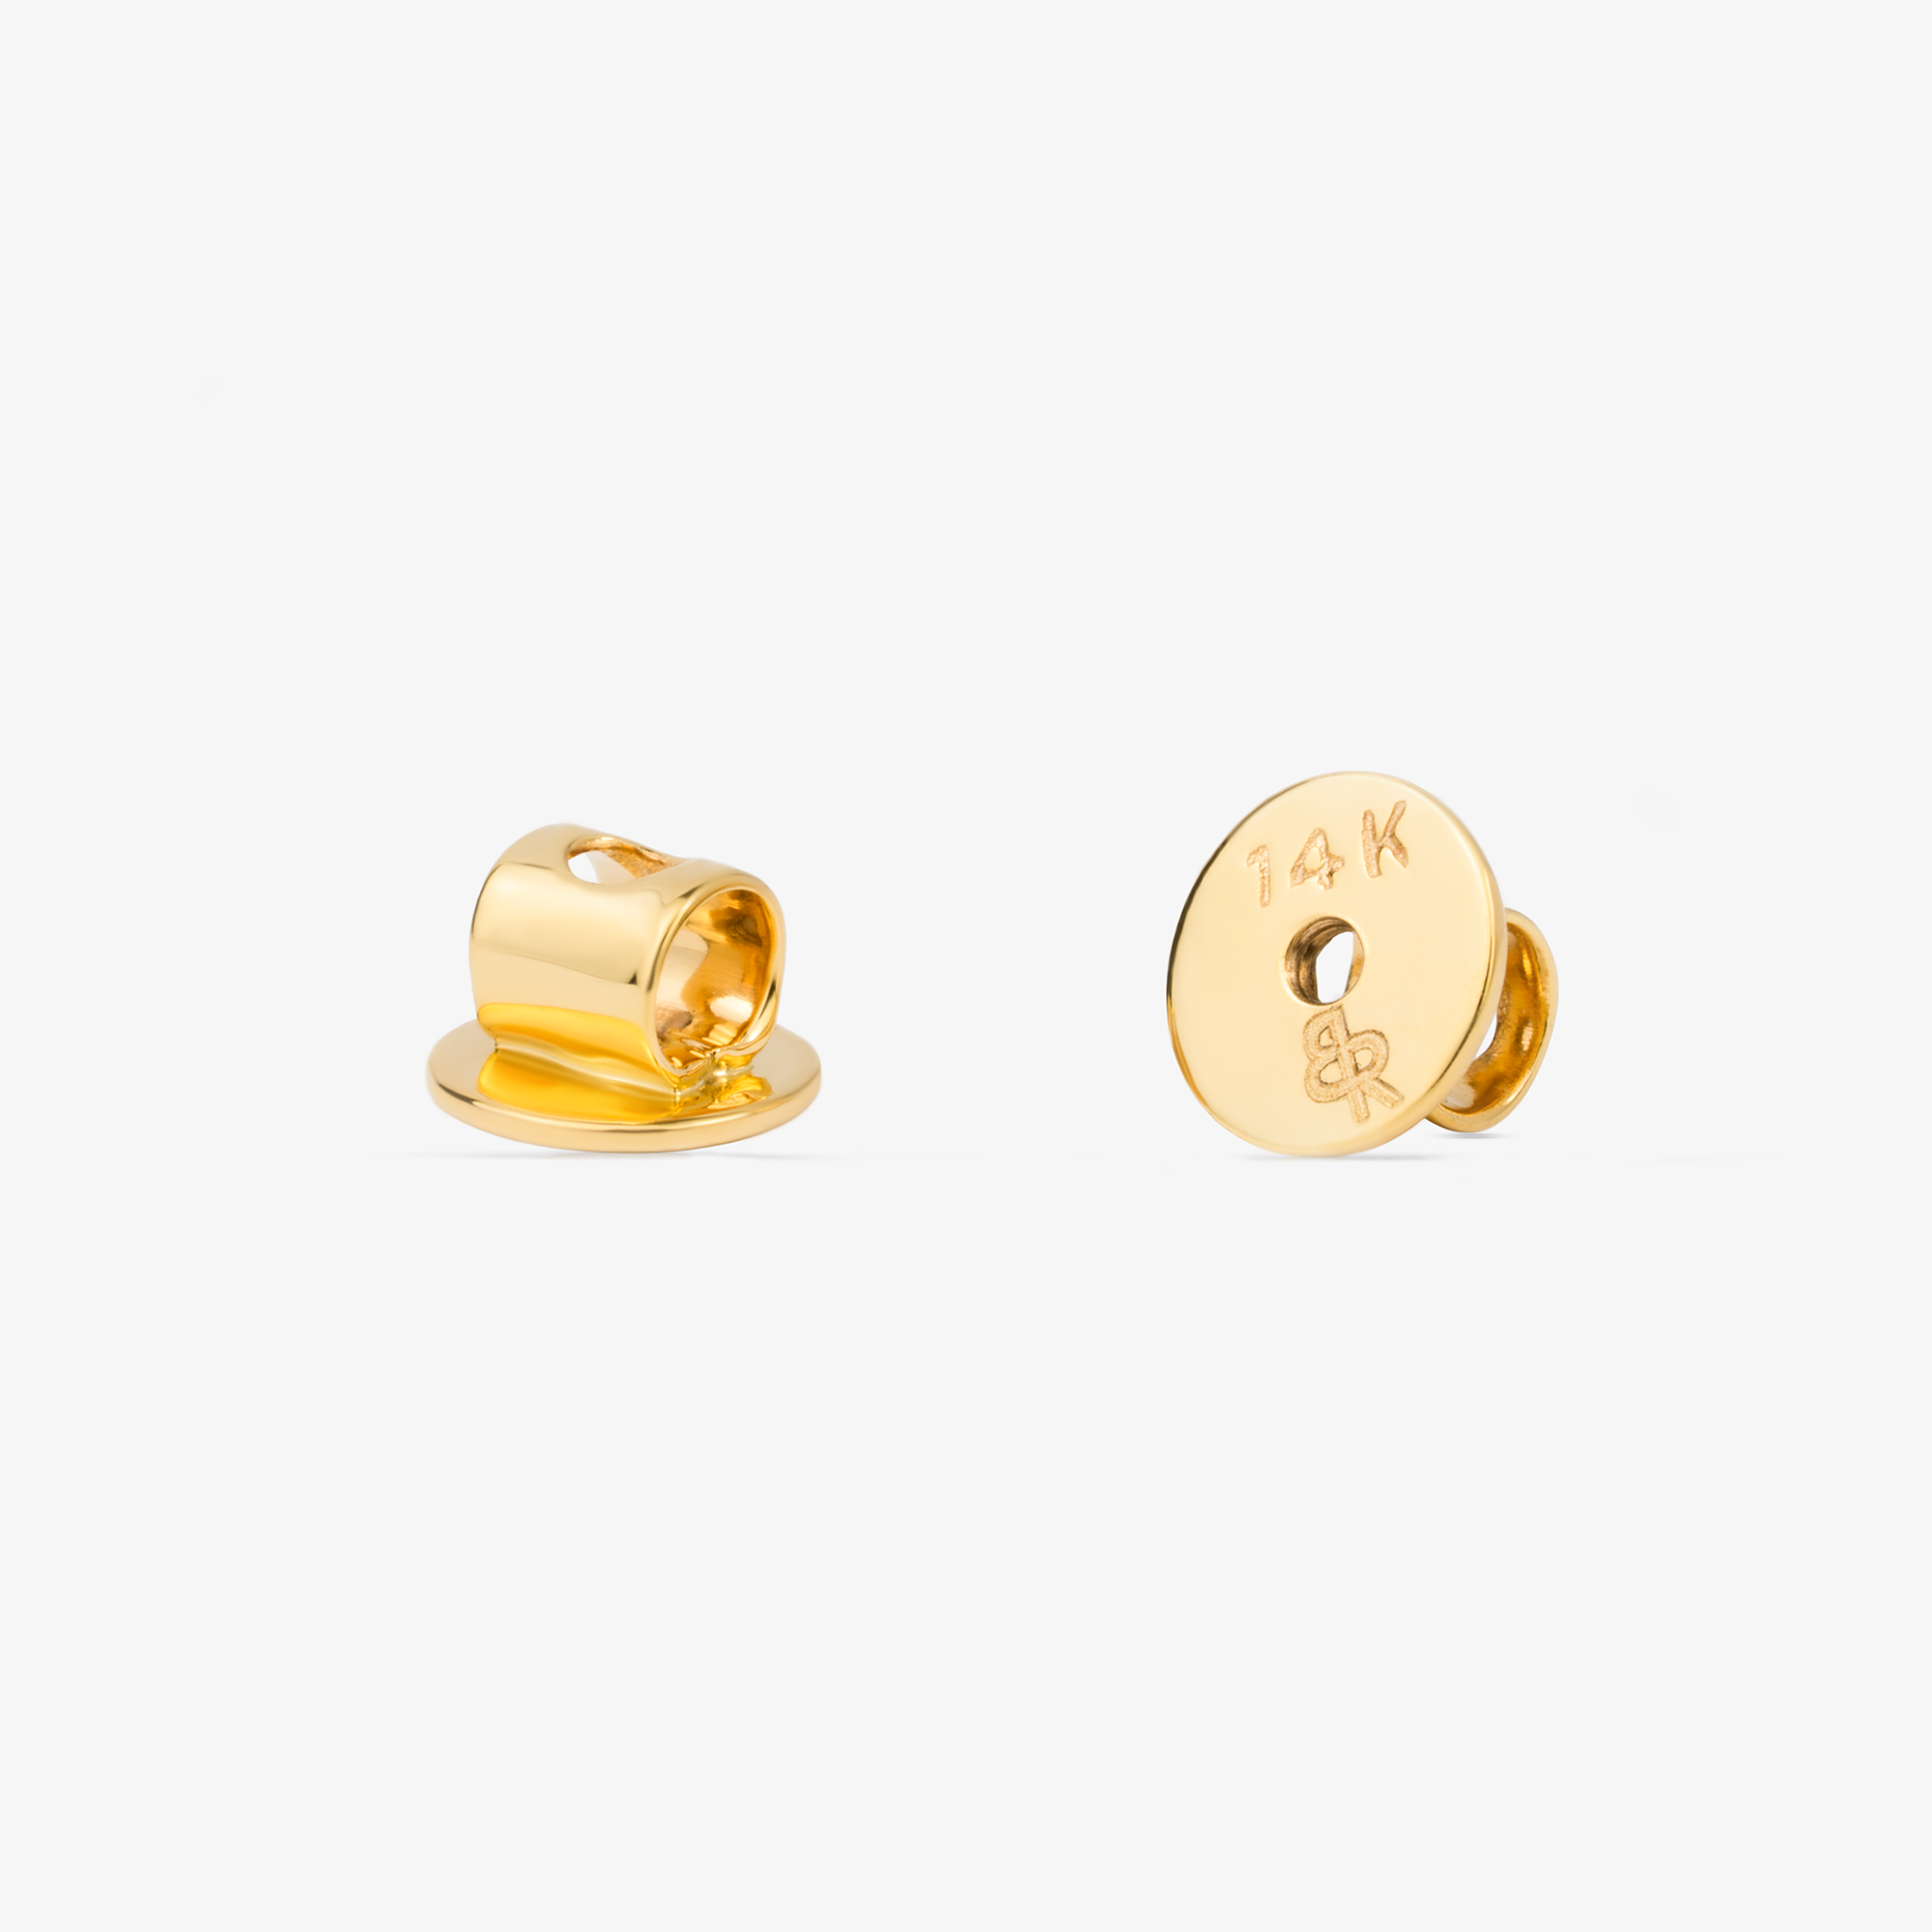 1 Carat Princess-Cut Diamond Stud Earrings In 14K Solid Yellow Gold